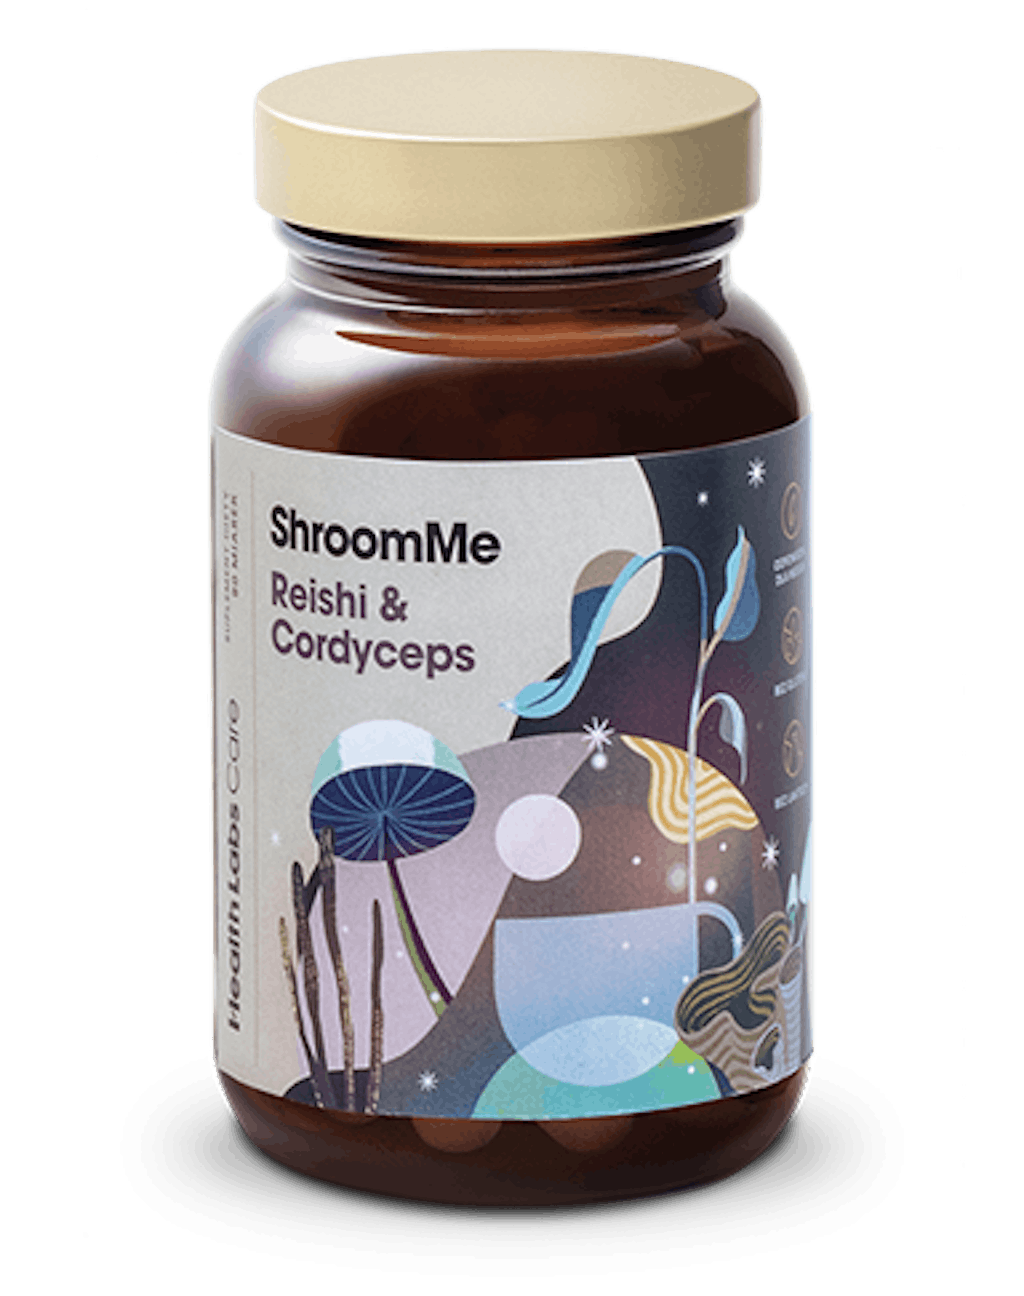 ShroomMe Reishi & Cordyceps